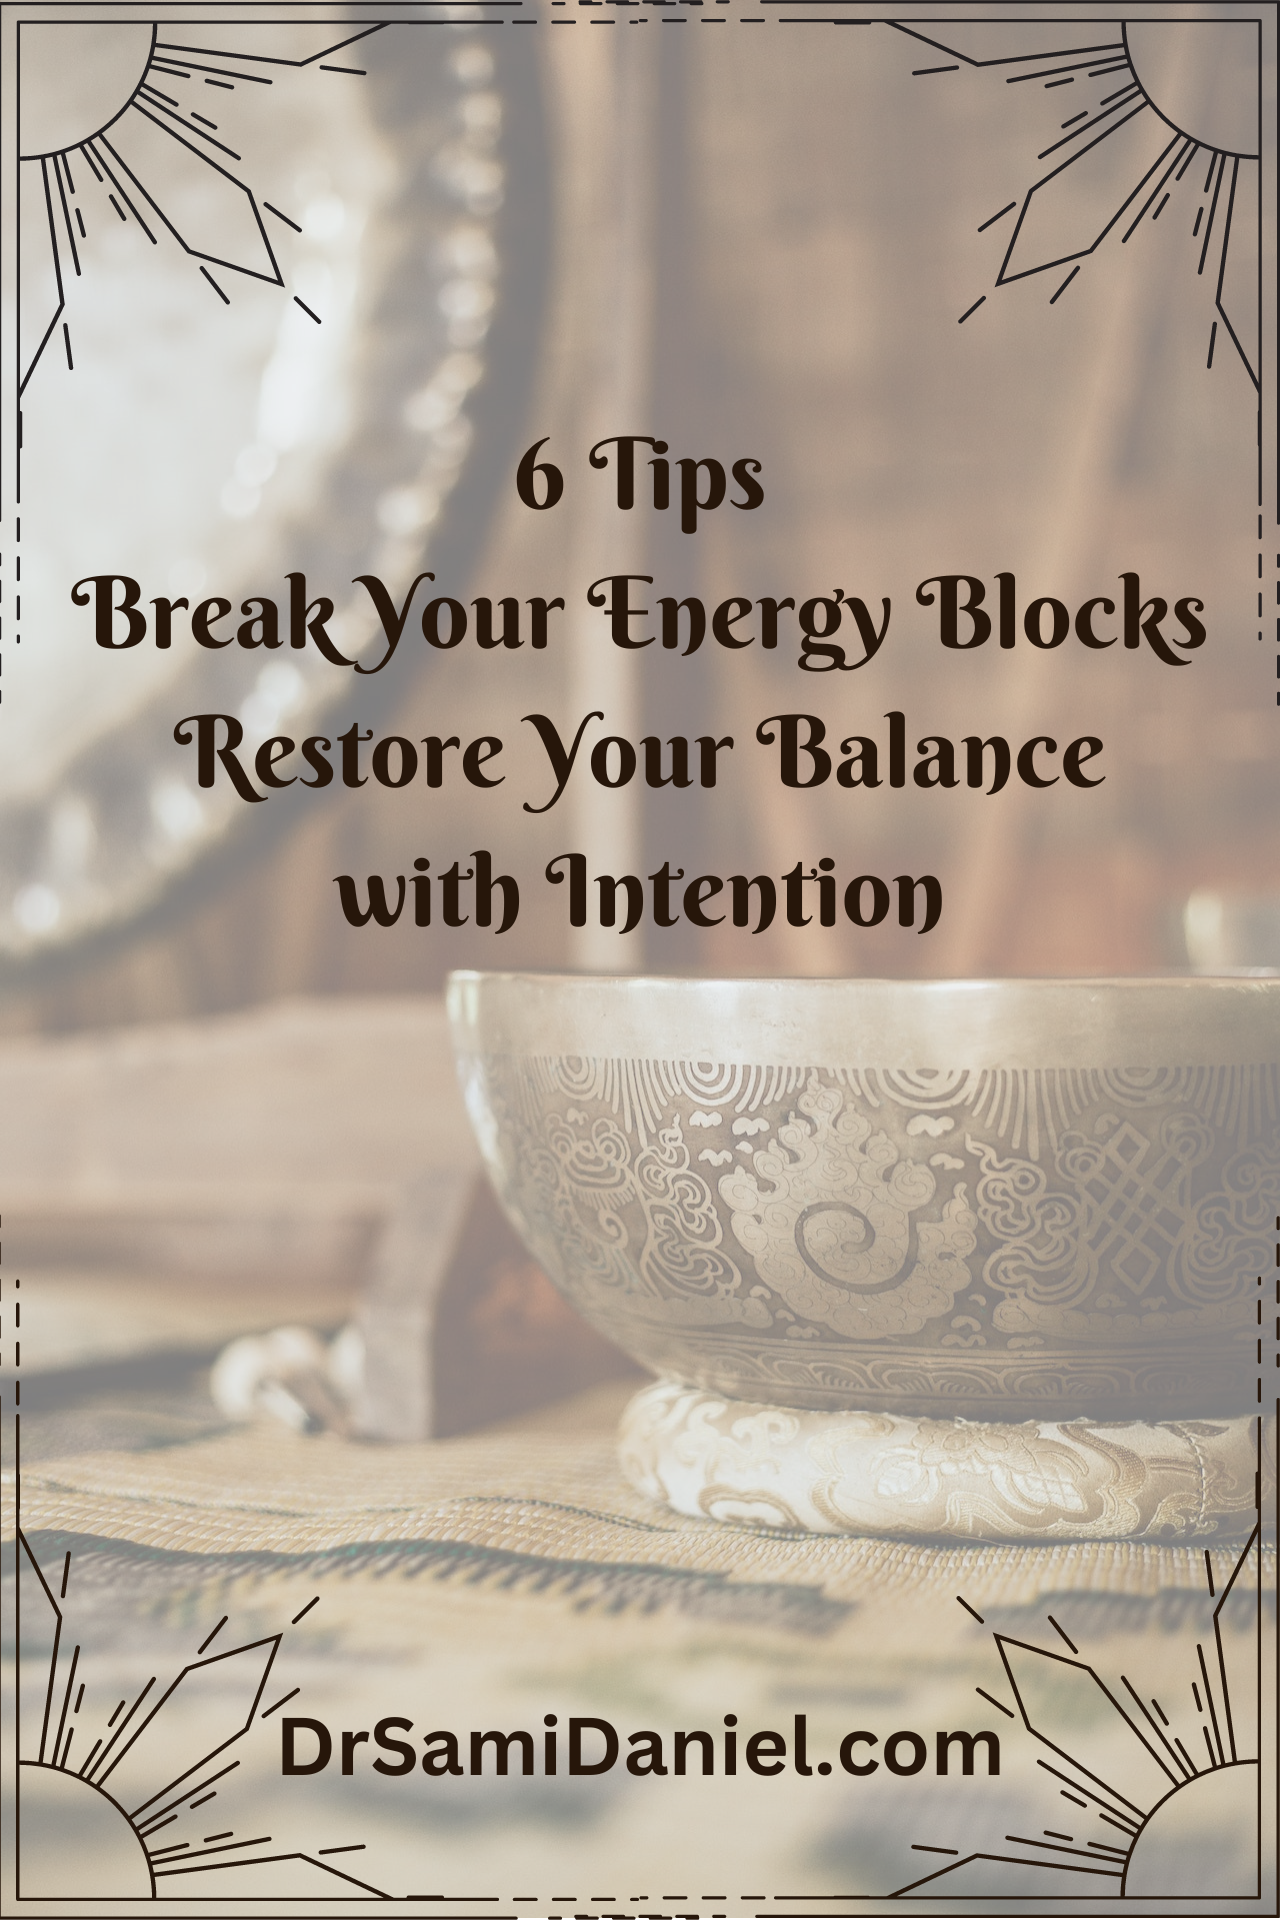 6 Tips. Break Energy blocks. Restore balance with intention.